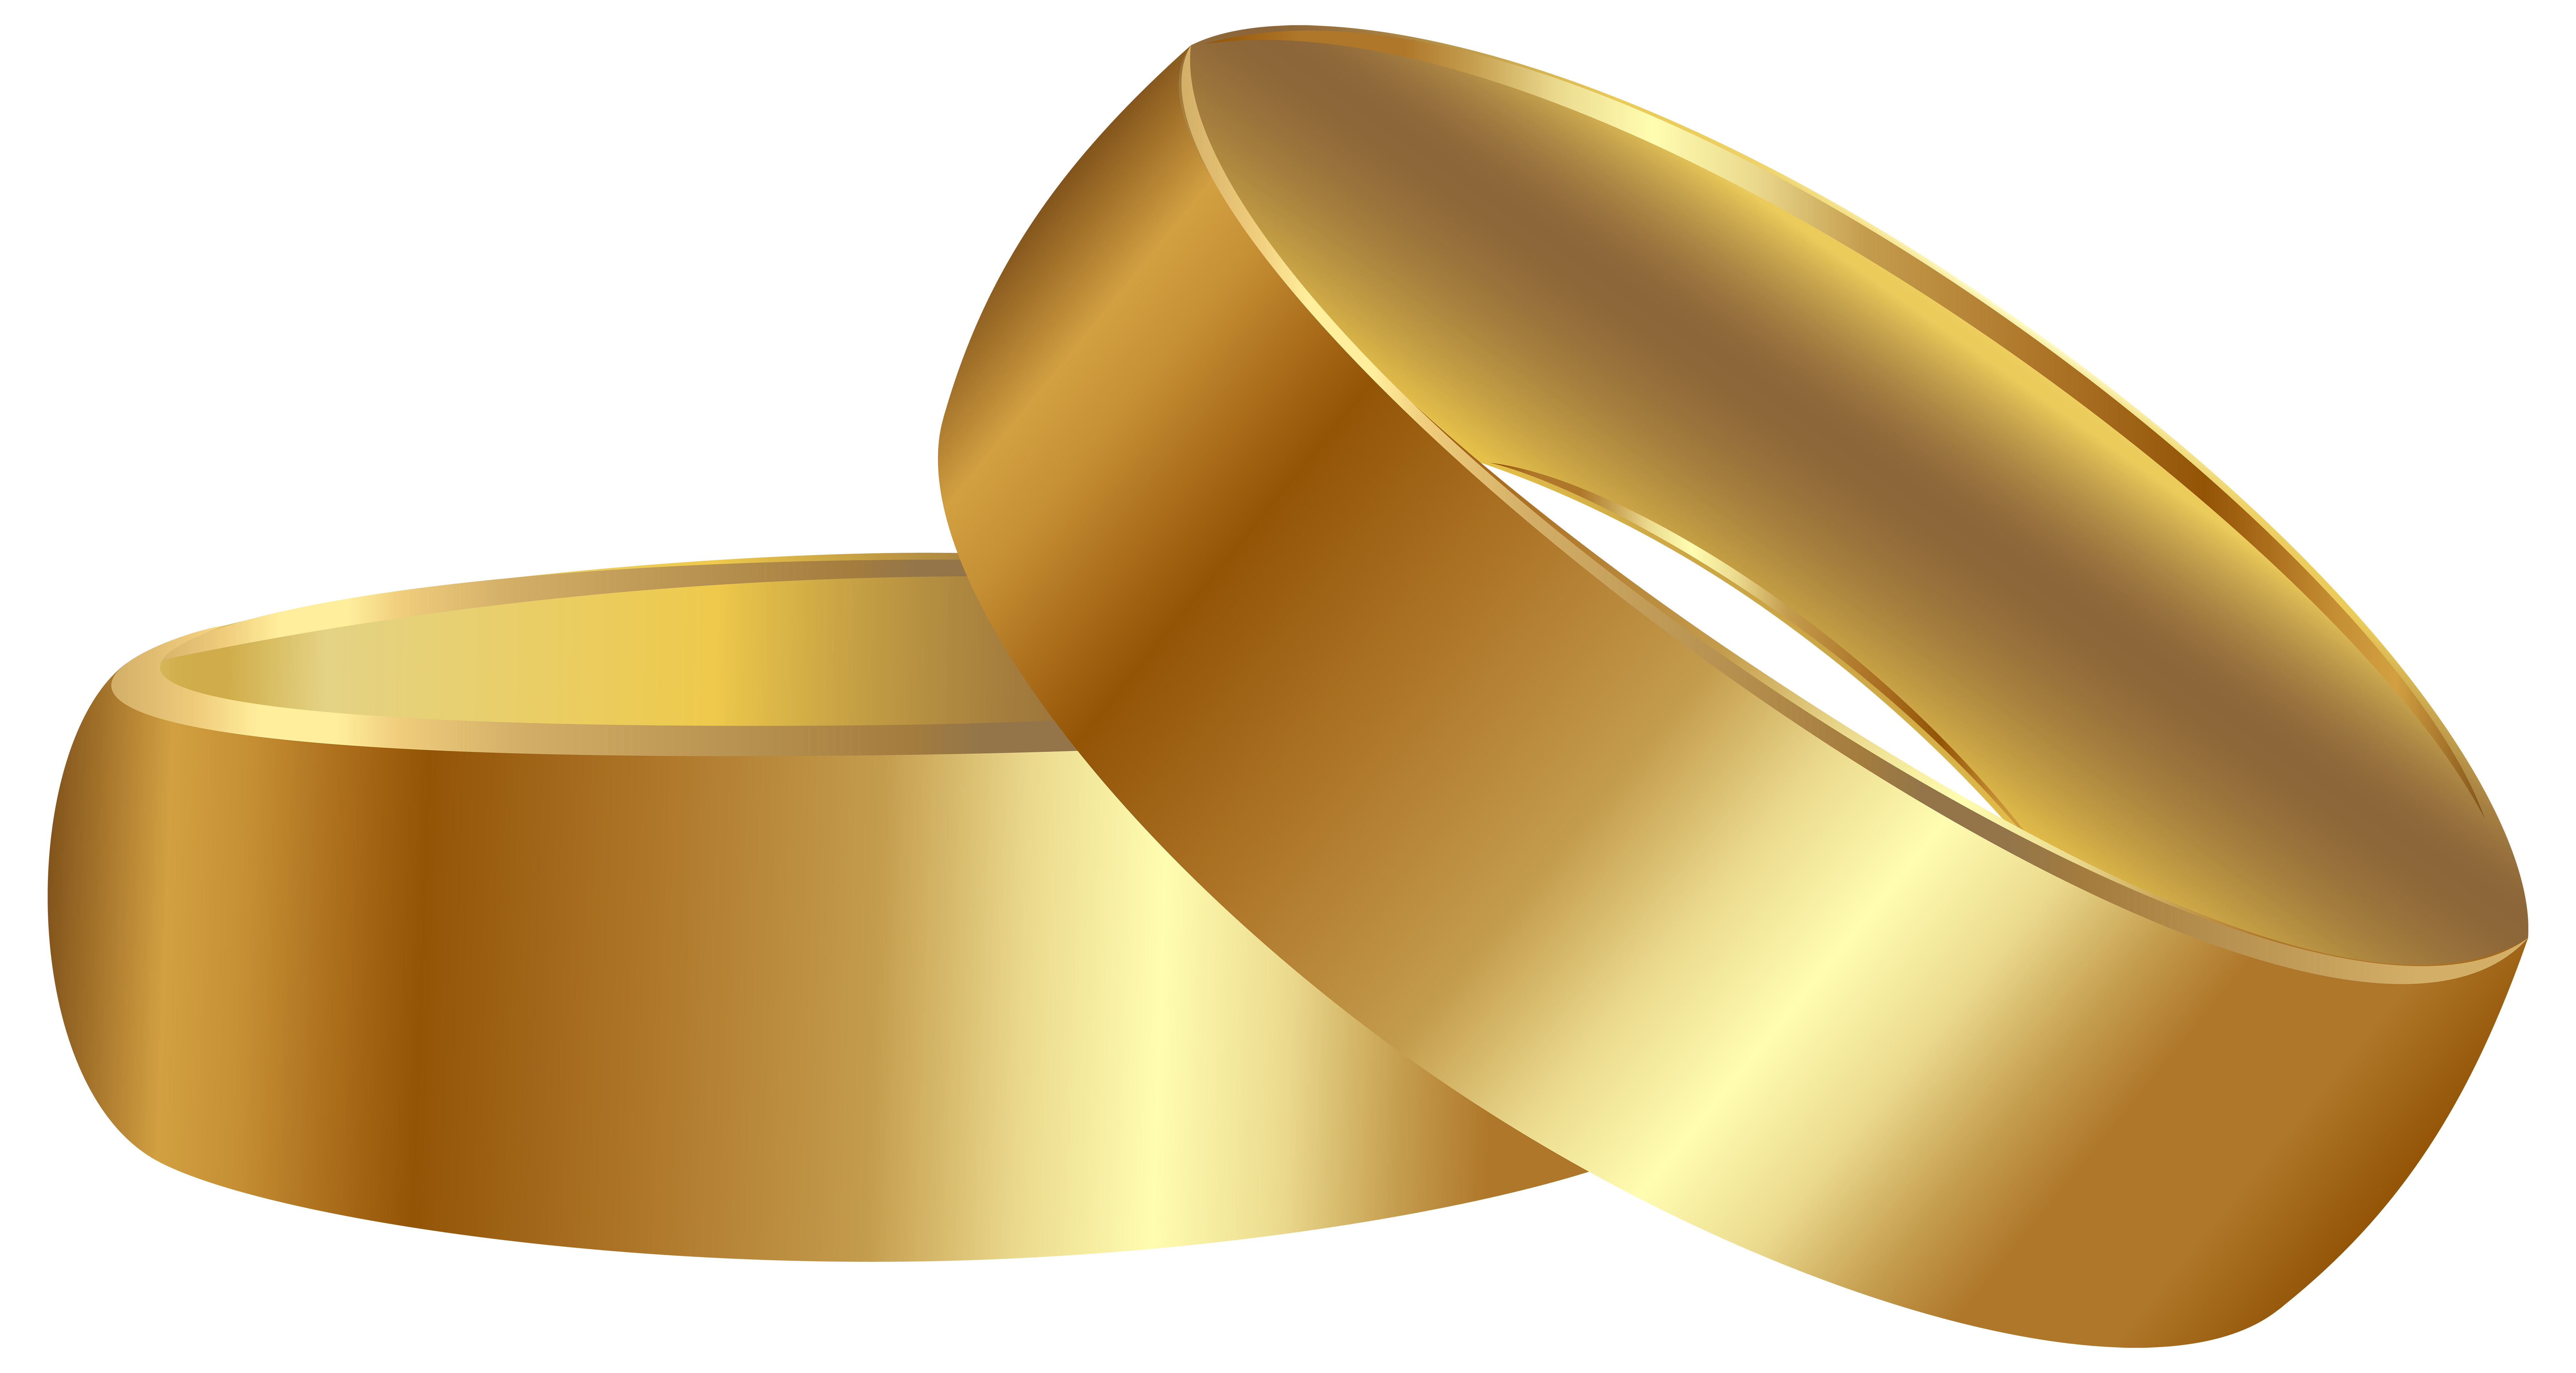 wedding rings clip art gold